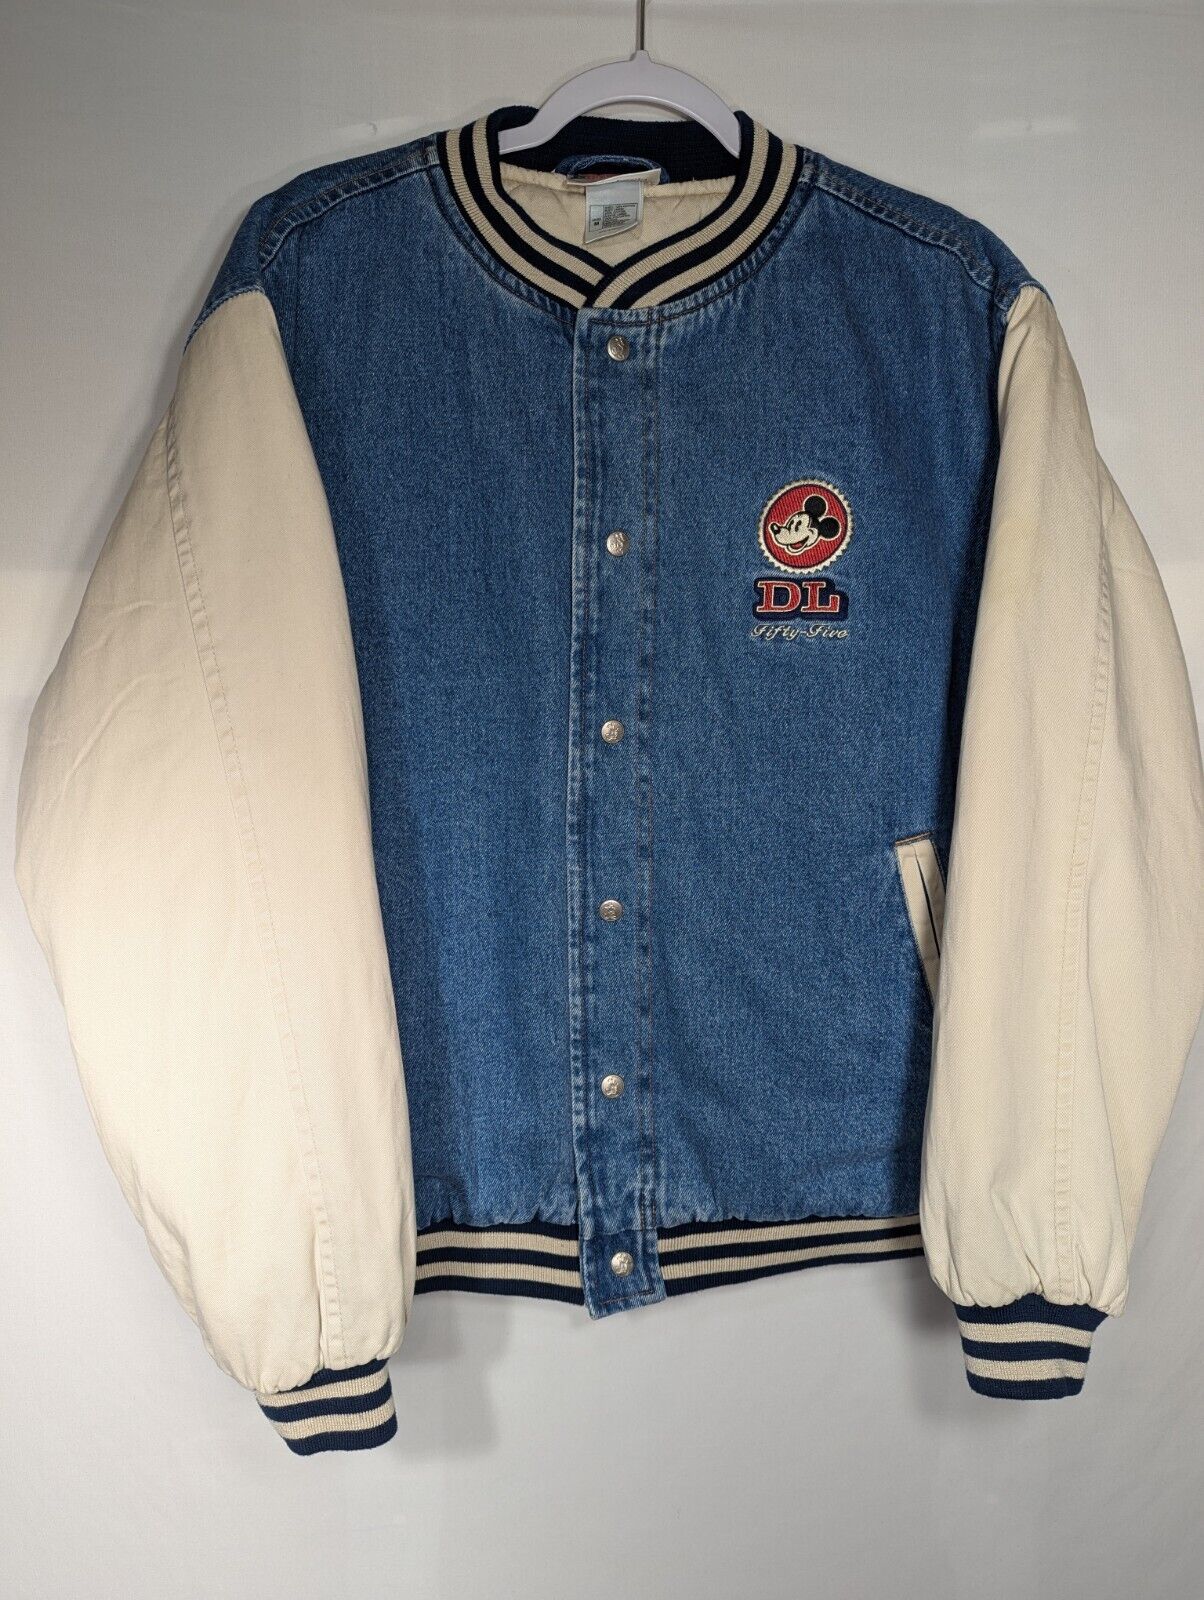 Vintage Disneyland Mickey Mouse Denim Jacket Quilted Varsity Jacket Bomber XL